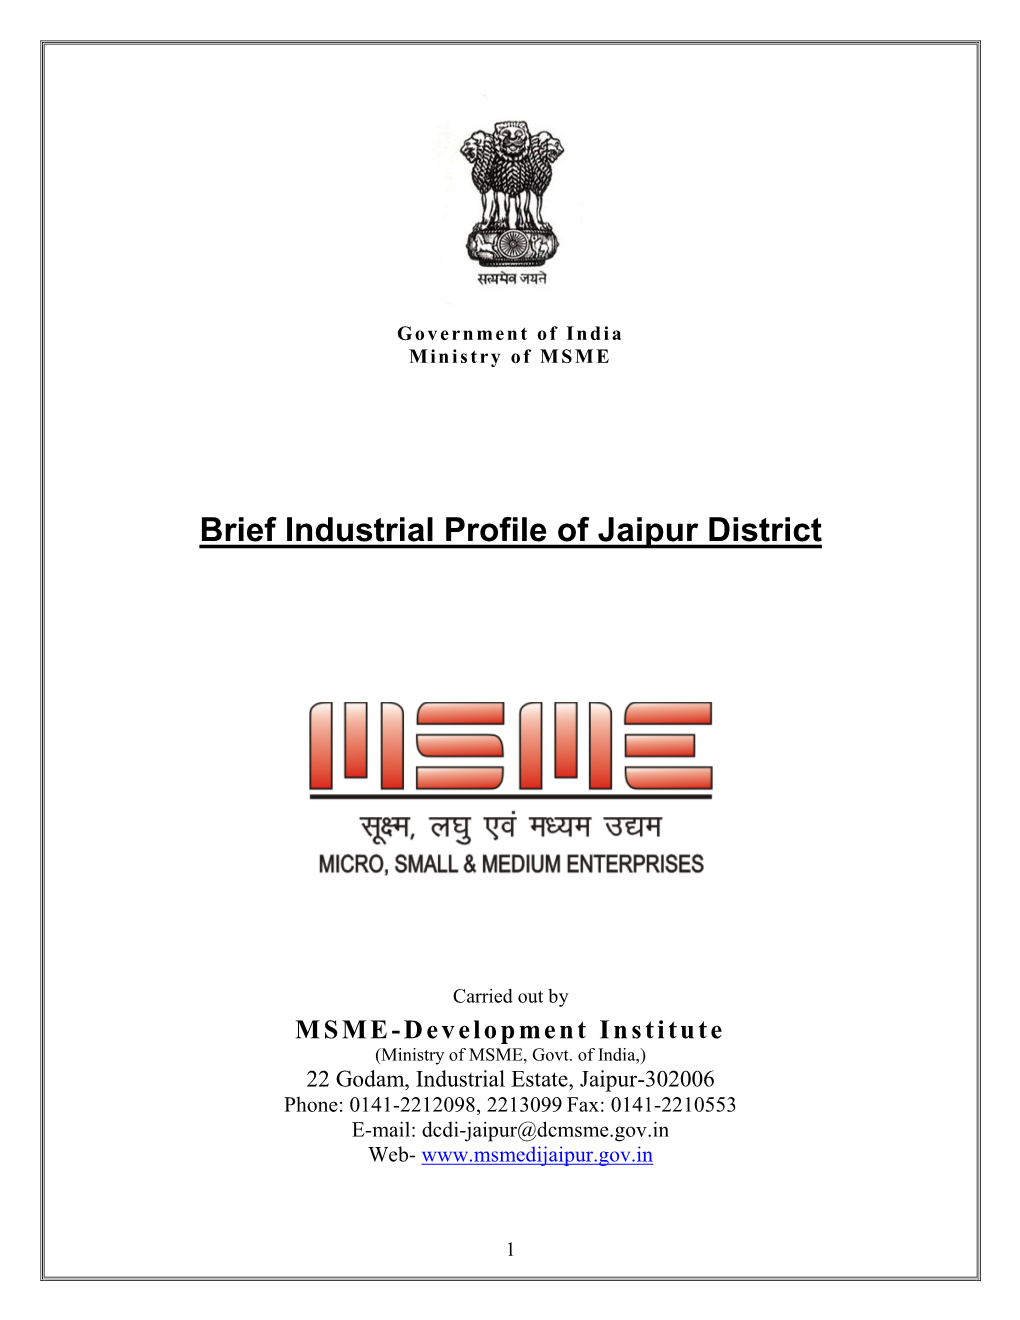 Brief Industrial Profile of Jaipur District